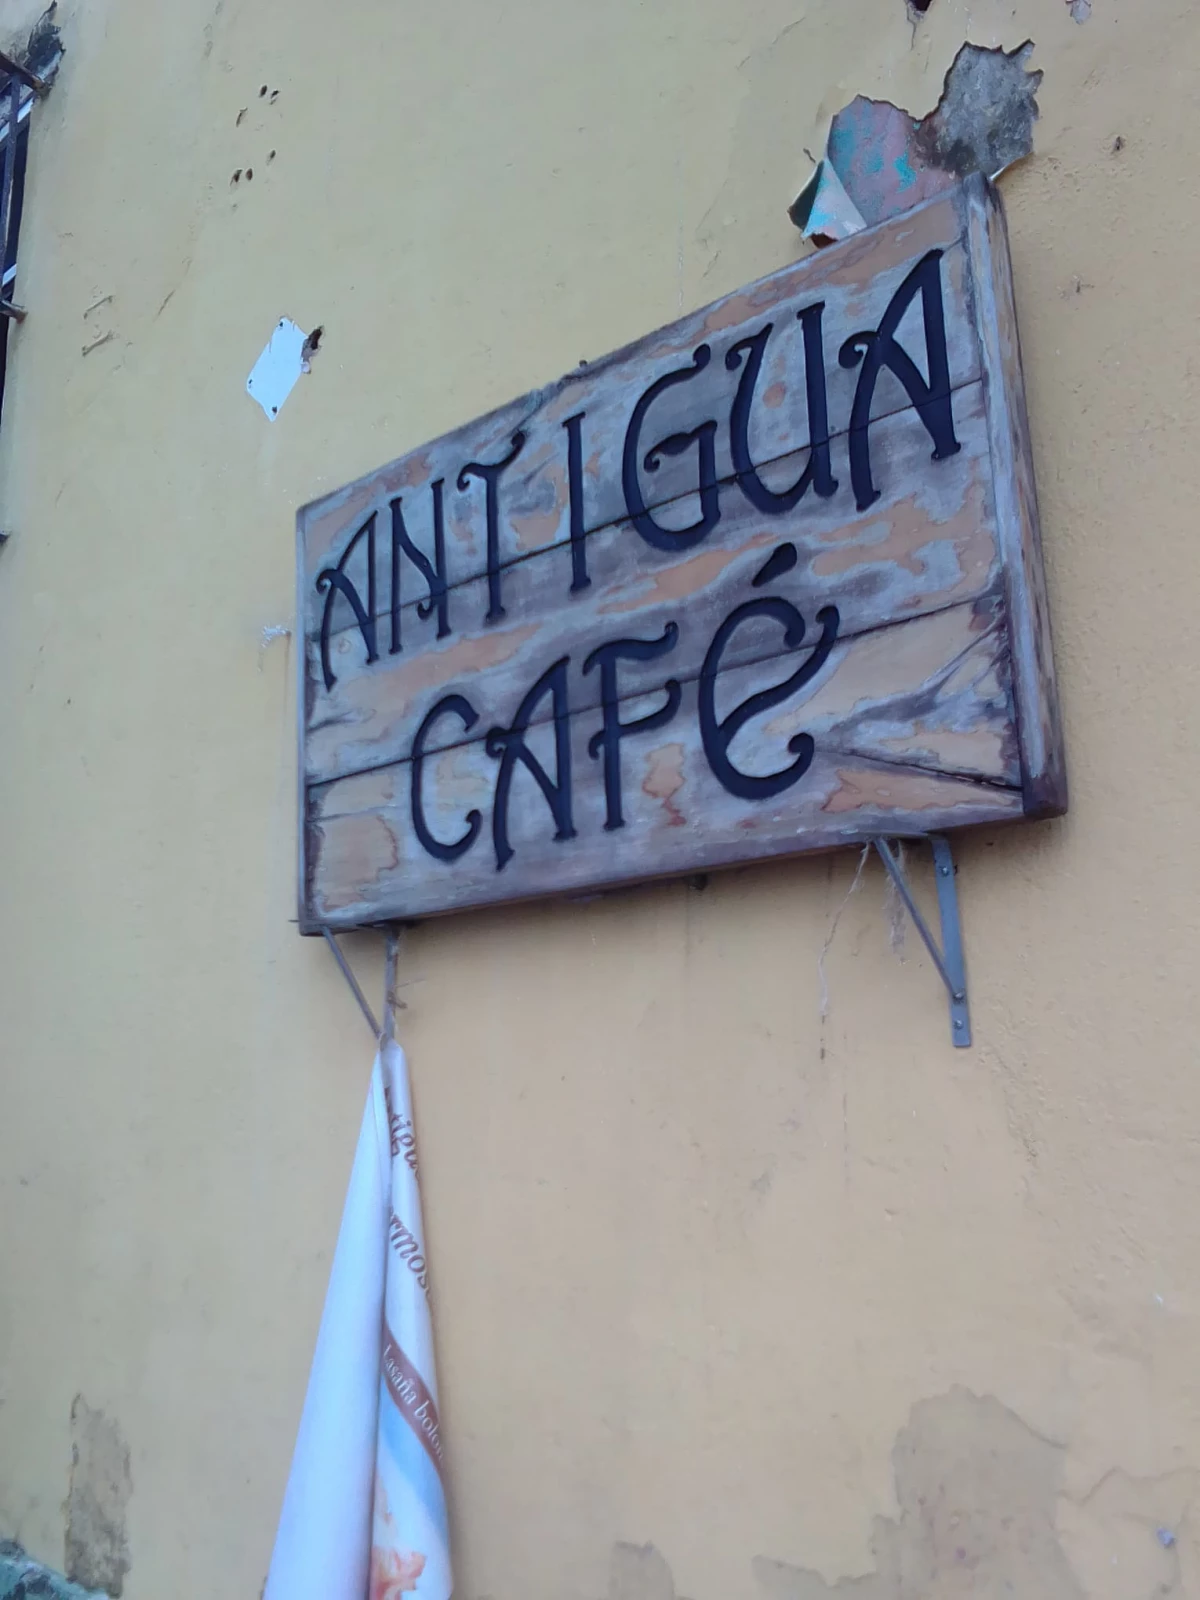 Antigua Cafe